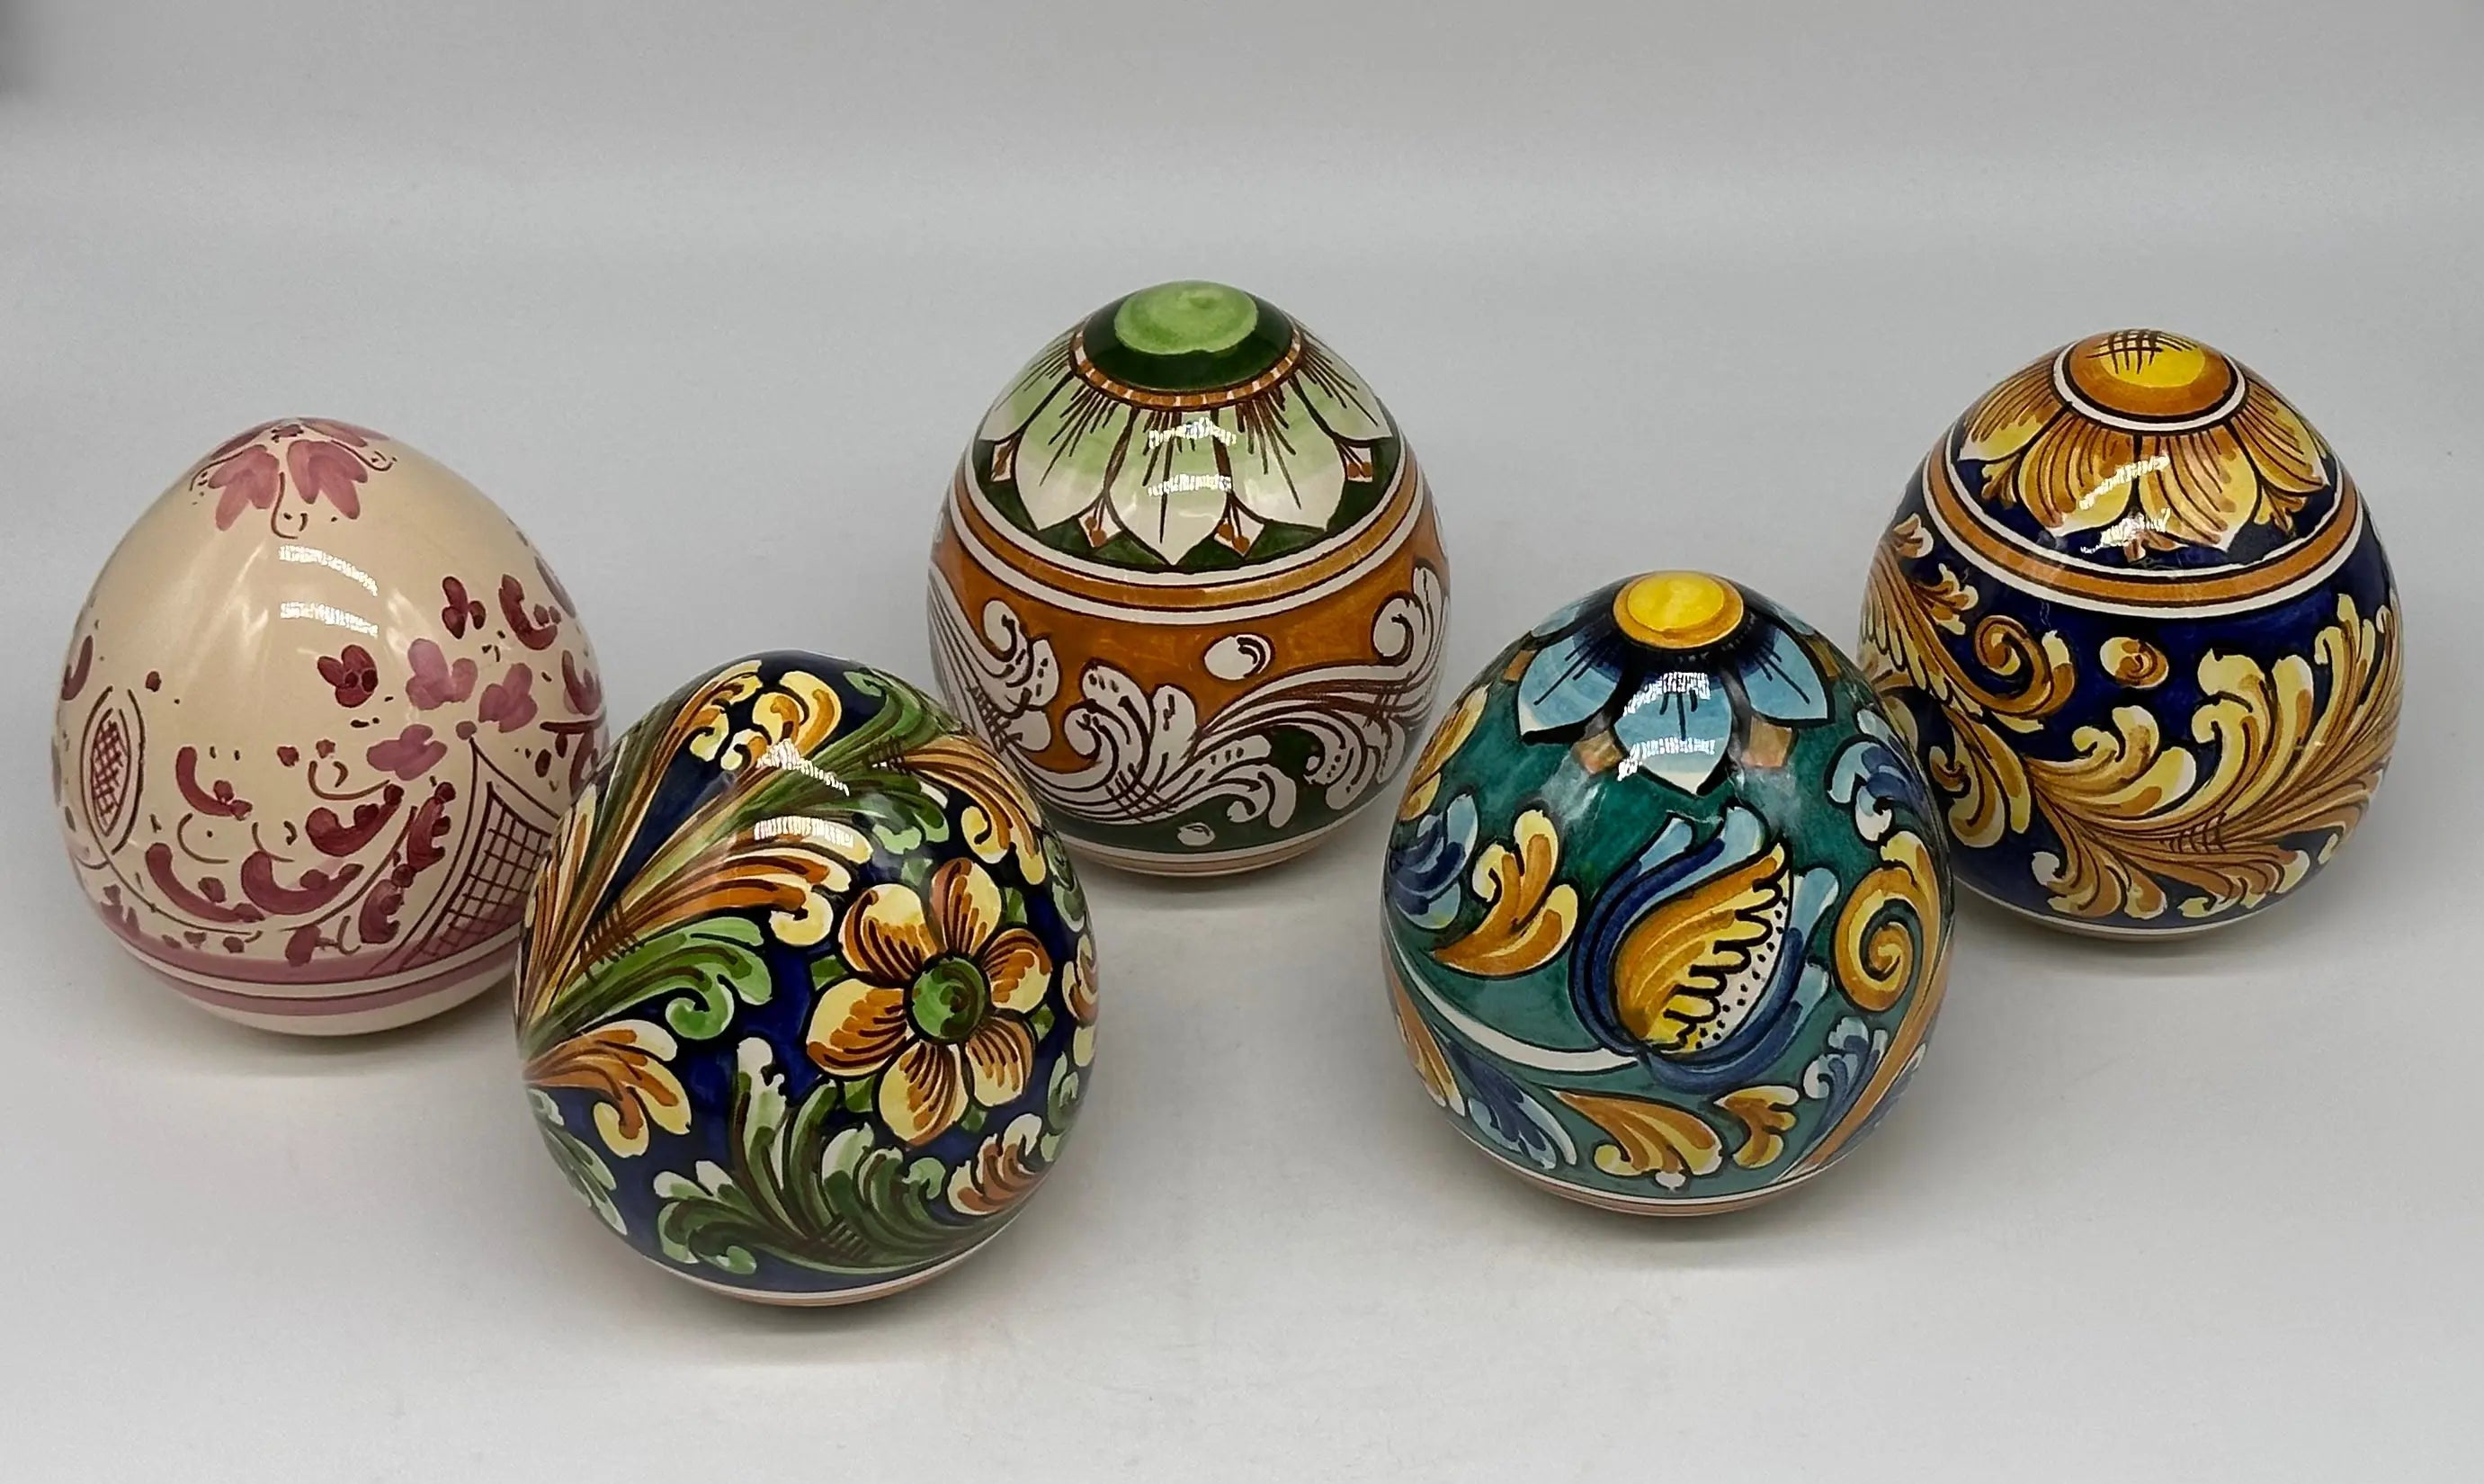 Portaposate in ceramica di Caltagirone dipinta a mano da artigiani